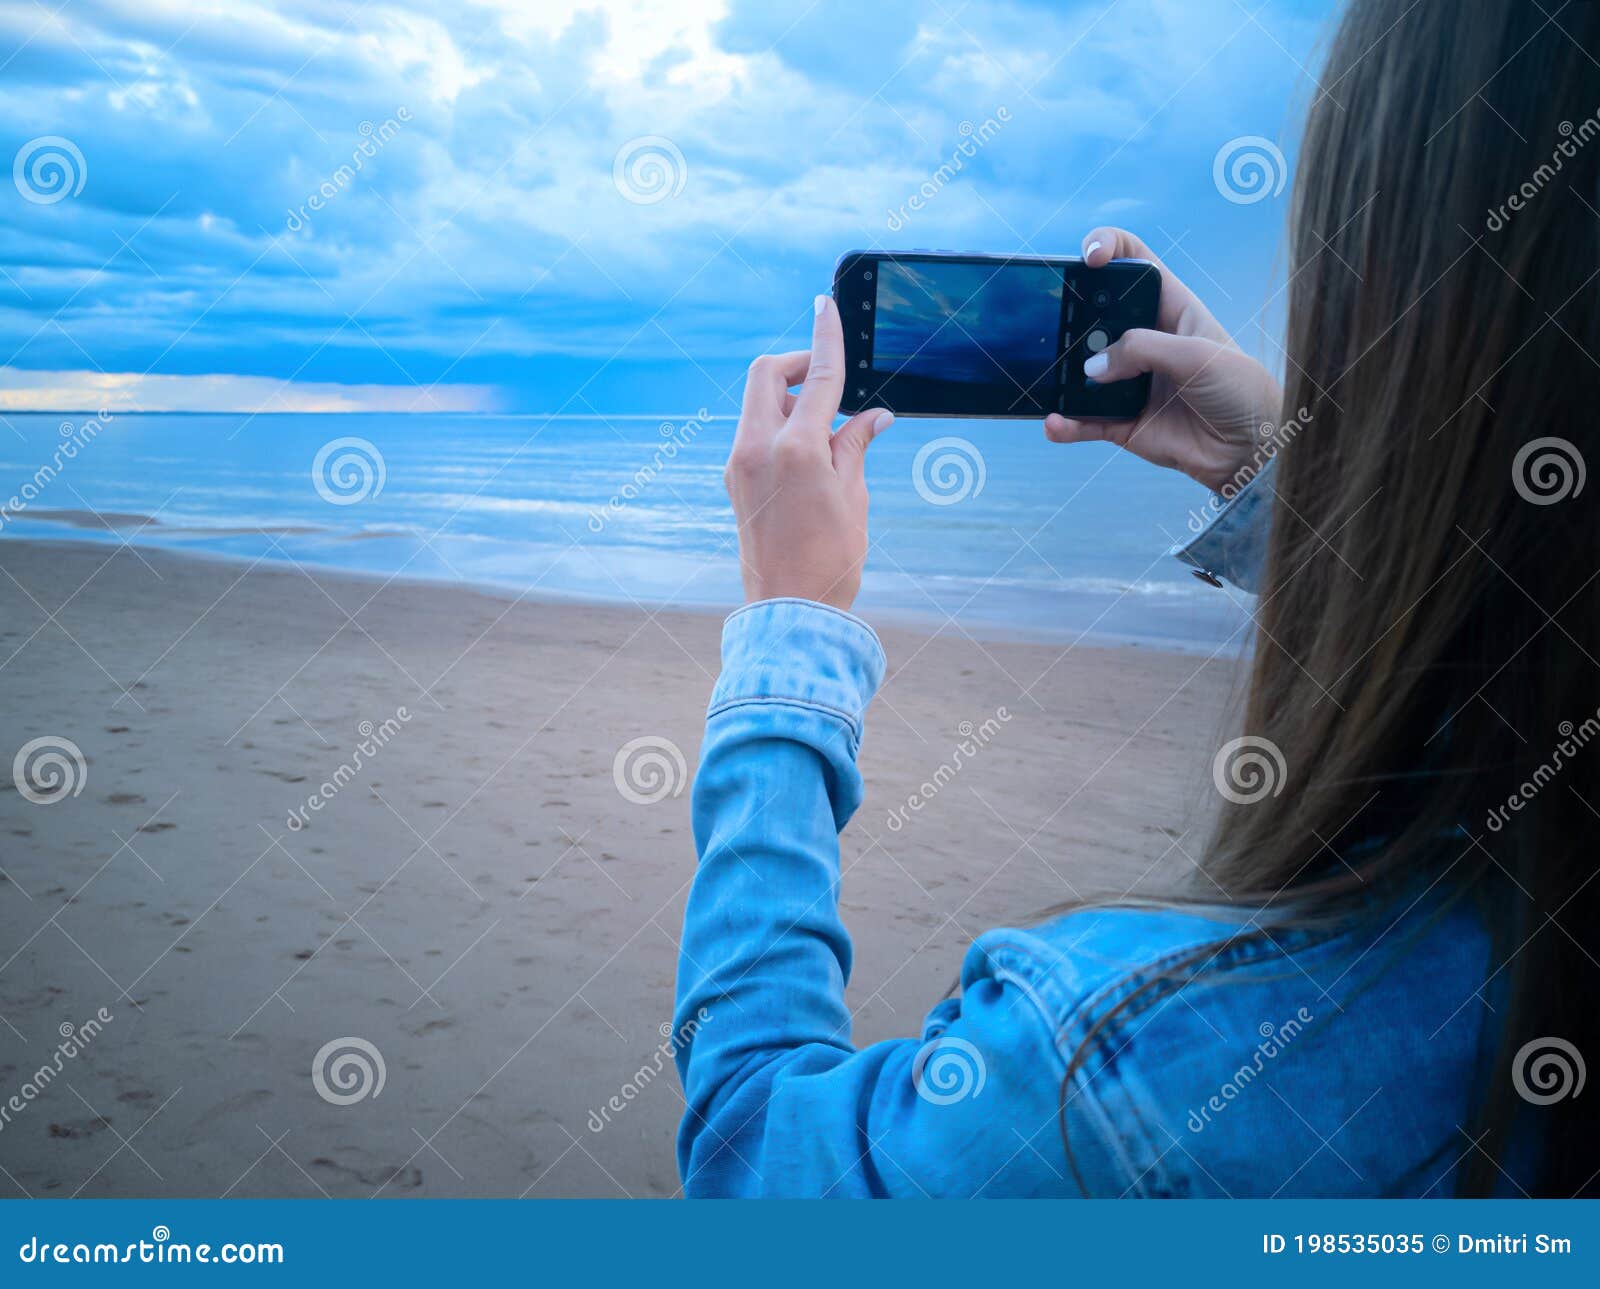 Девушка фотографируется на море.